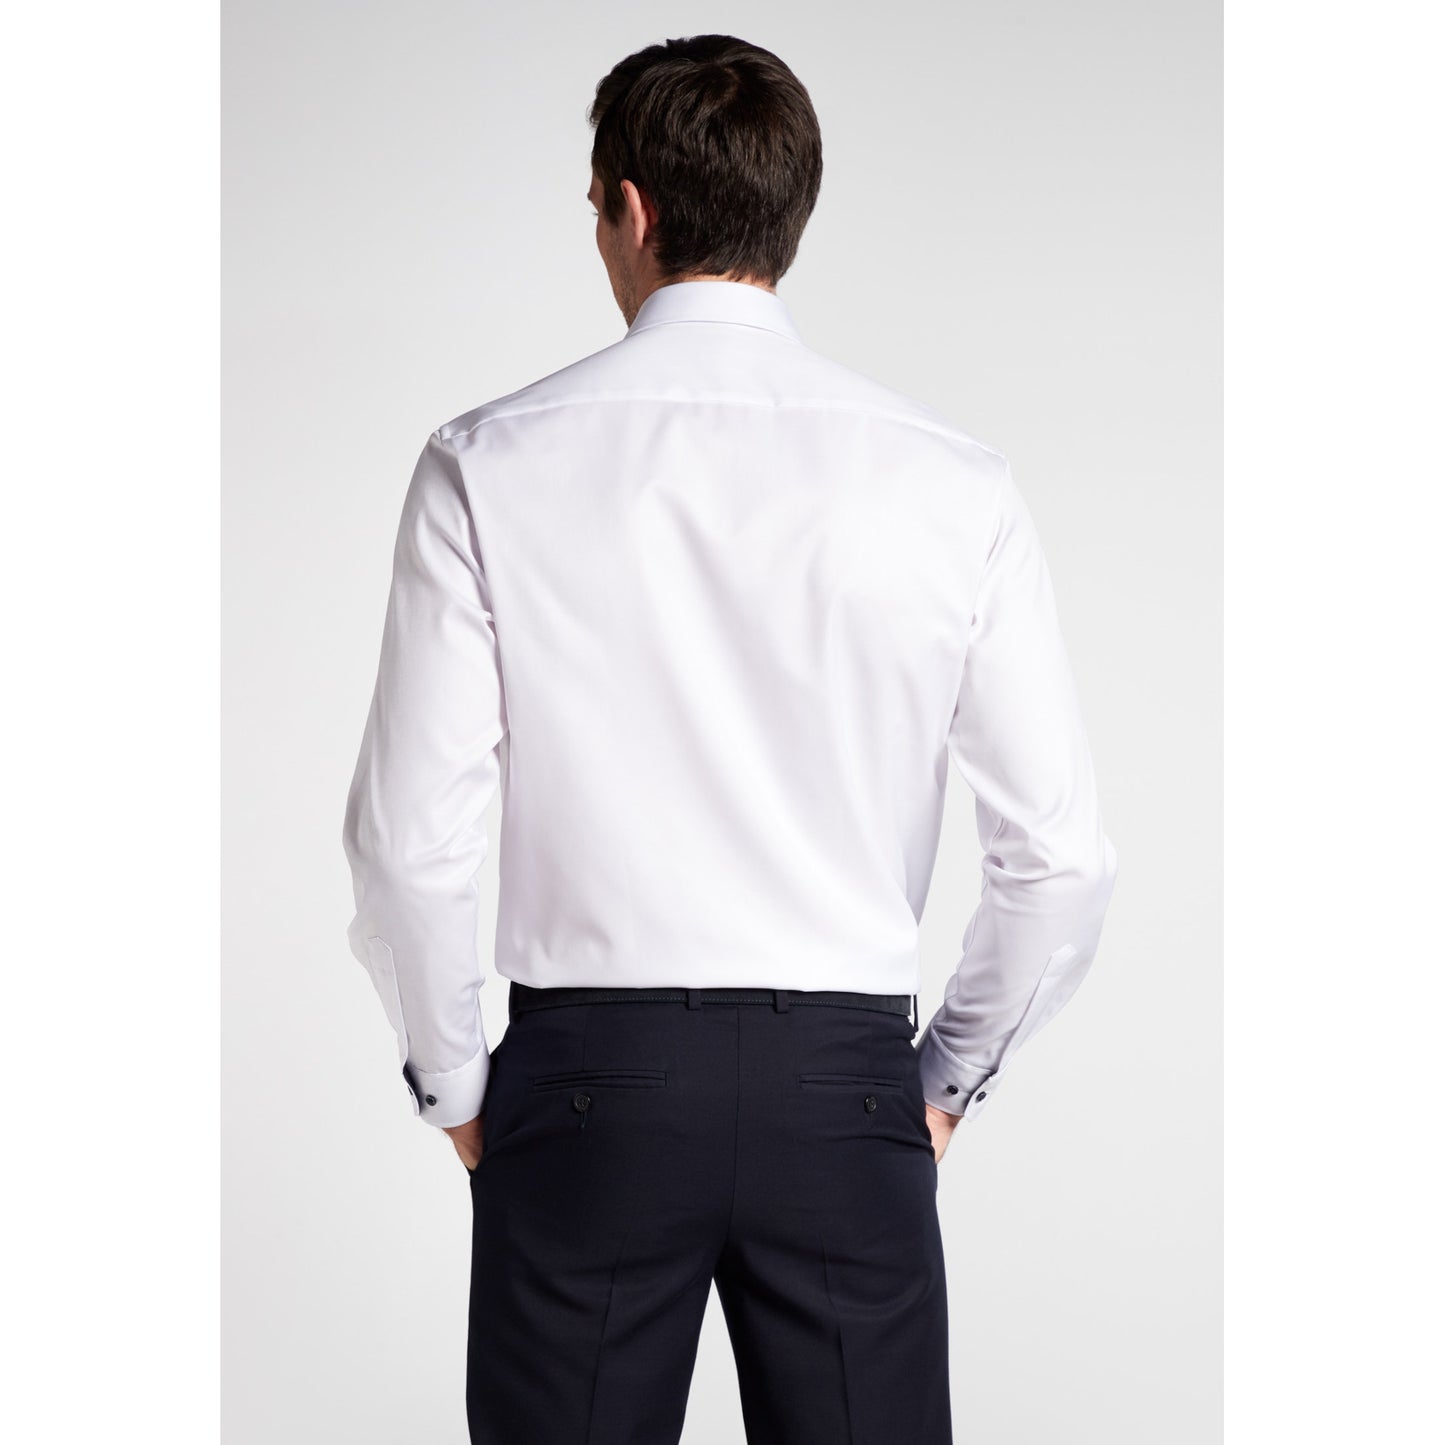 Eterna 8819 00 E15V White Comfort Fit Shirt